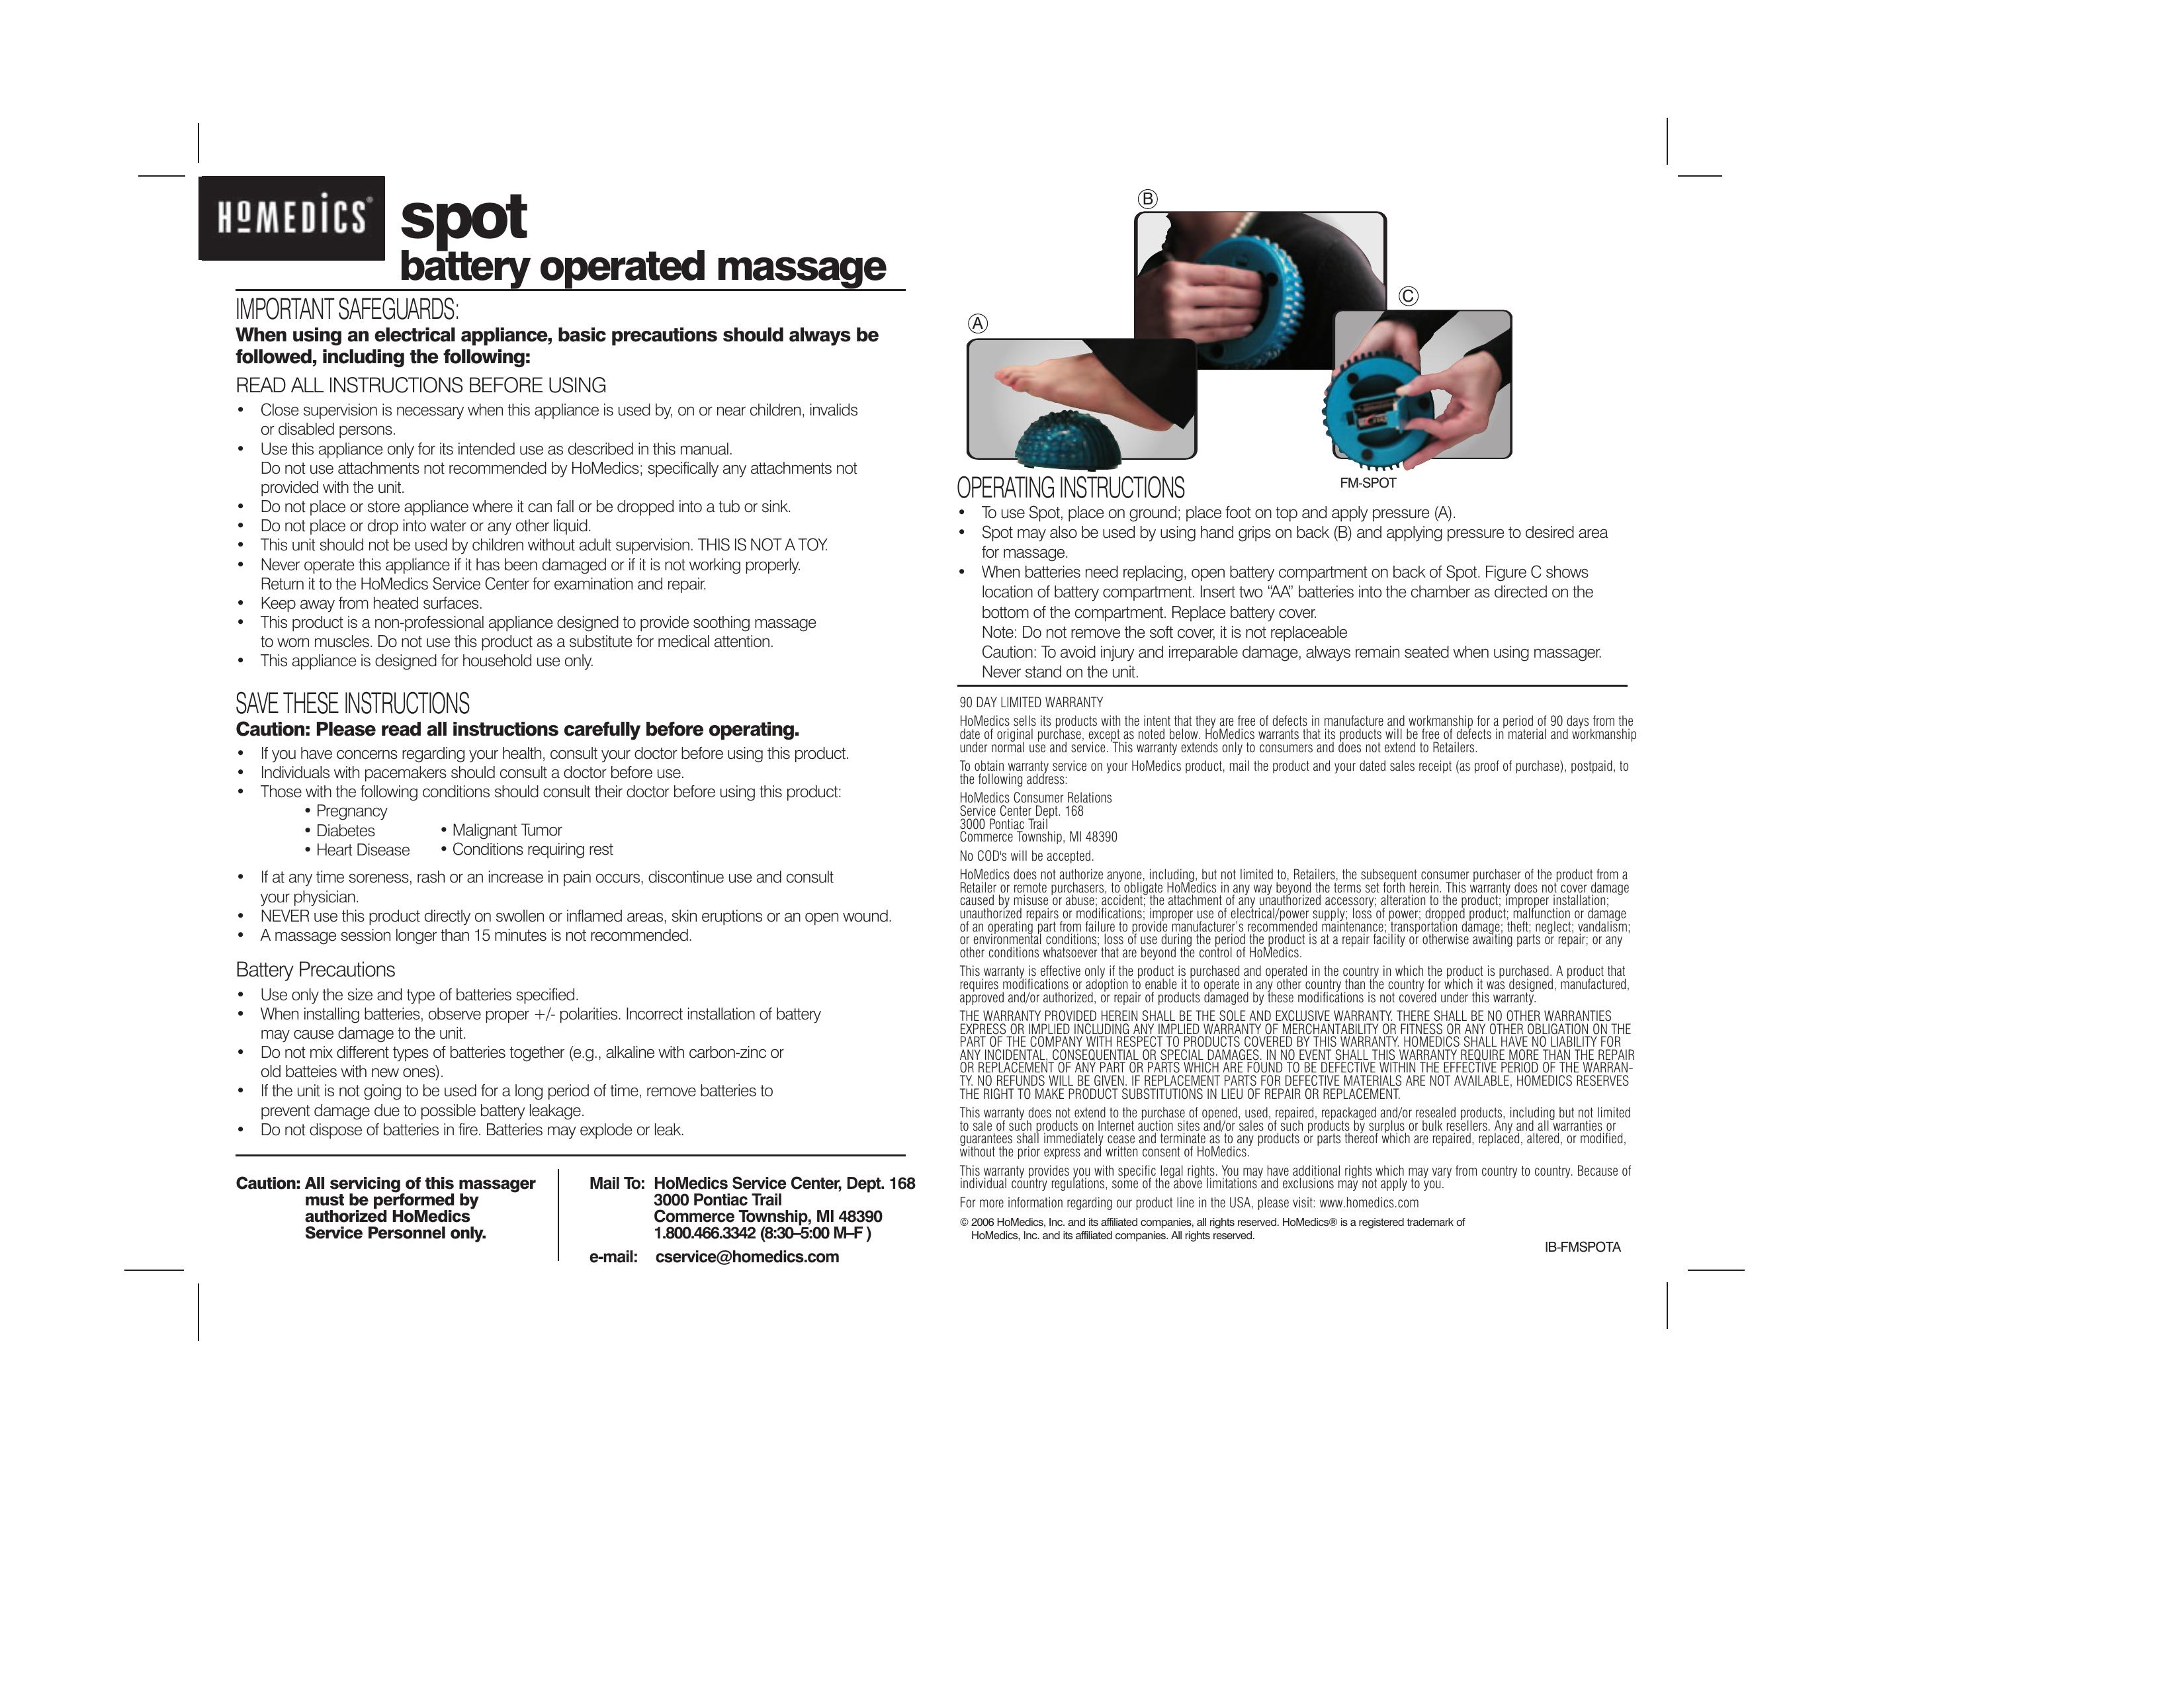 HoMedics battery operated massager Pedicure Spa User Manual